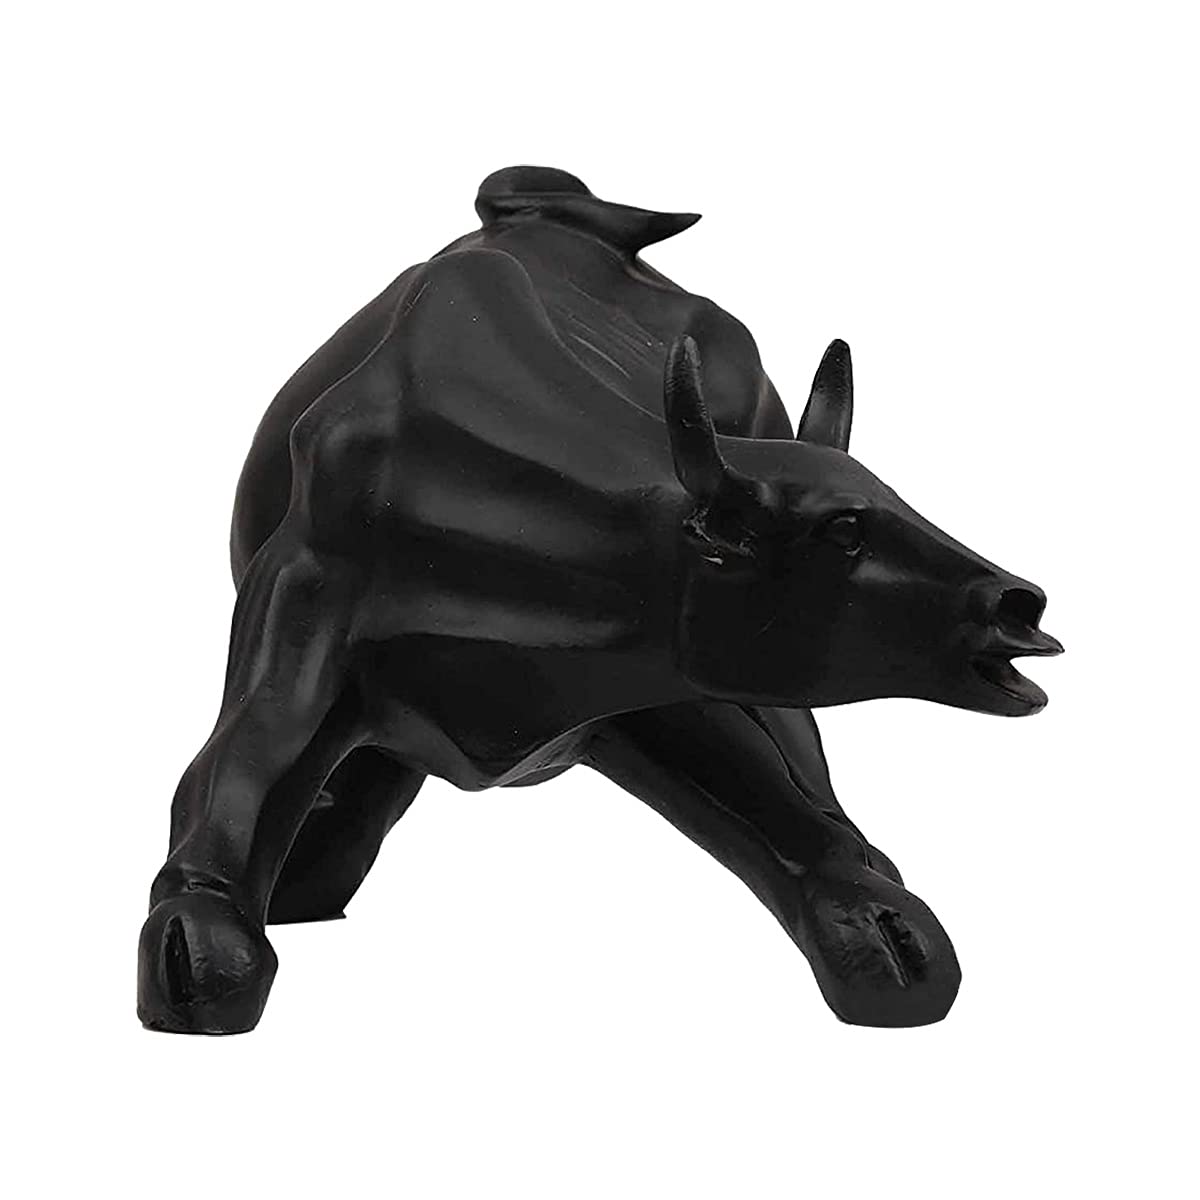 Geometric Bull Resin Statue Home Decor for Gift Items I Stock Market I Wall Street Charging Bull I (10", Black), 1 Piece - Decorwala